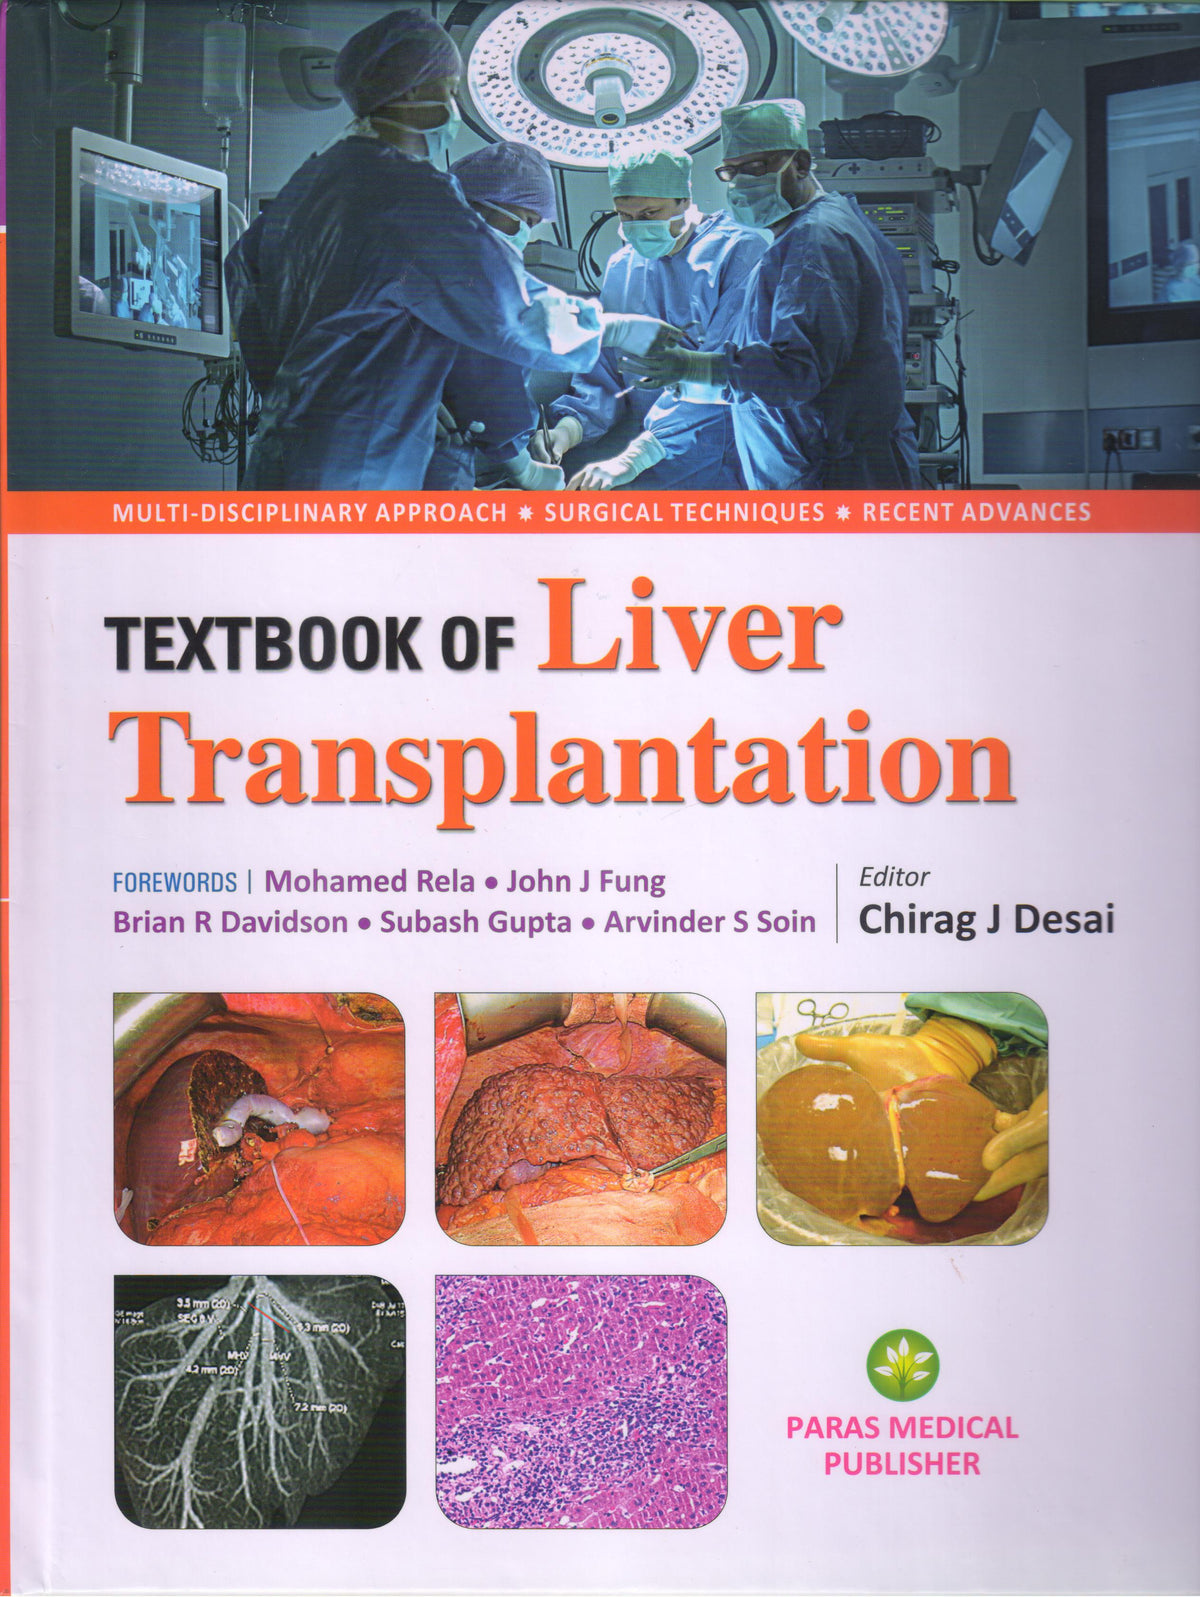 Textbook of Liver Transplantation 1st/2023
by 
Chirag J Desai